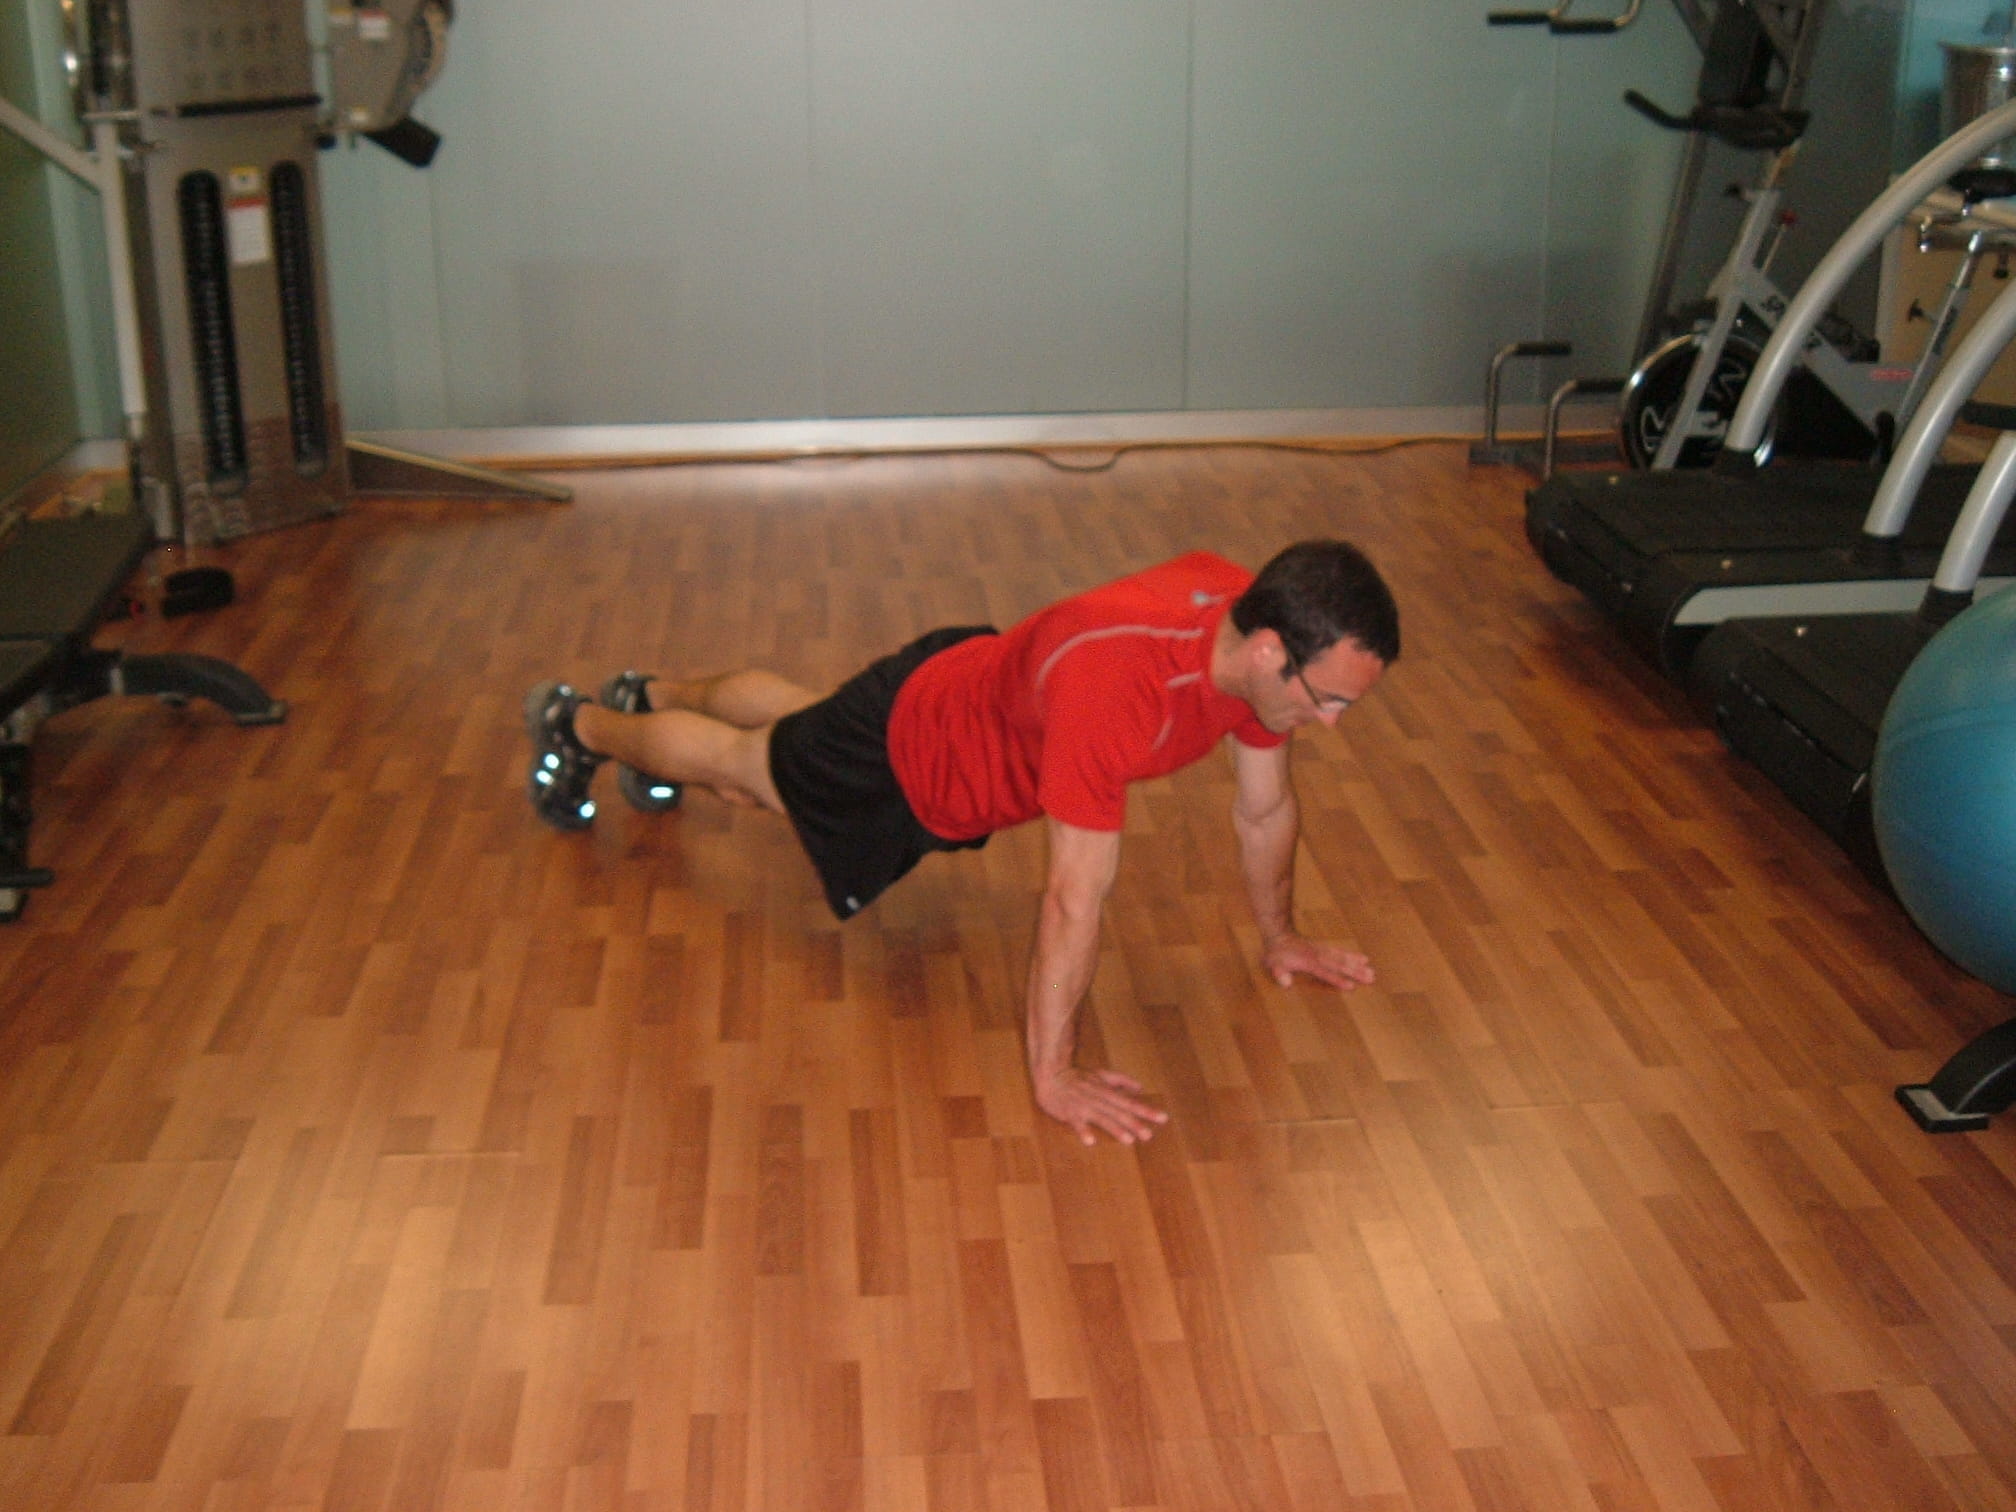 spiderman pushups - good core exercise